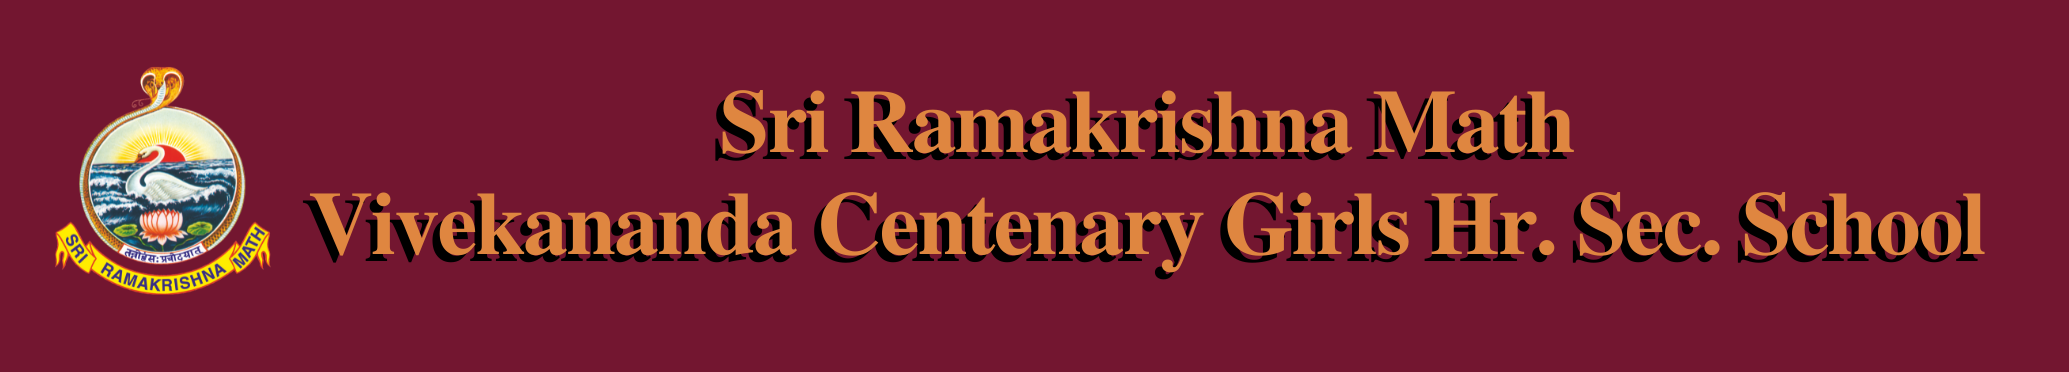 Sri Ramakrishna Math Vivekananda Centenary Girls Hr. Sec. School